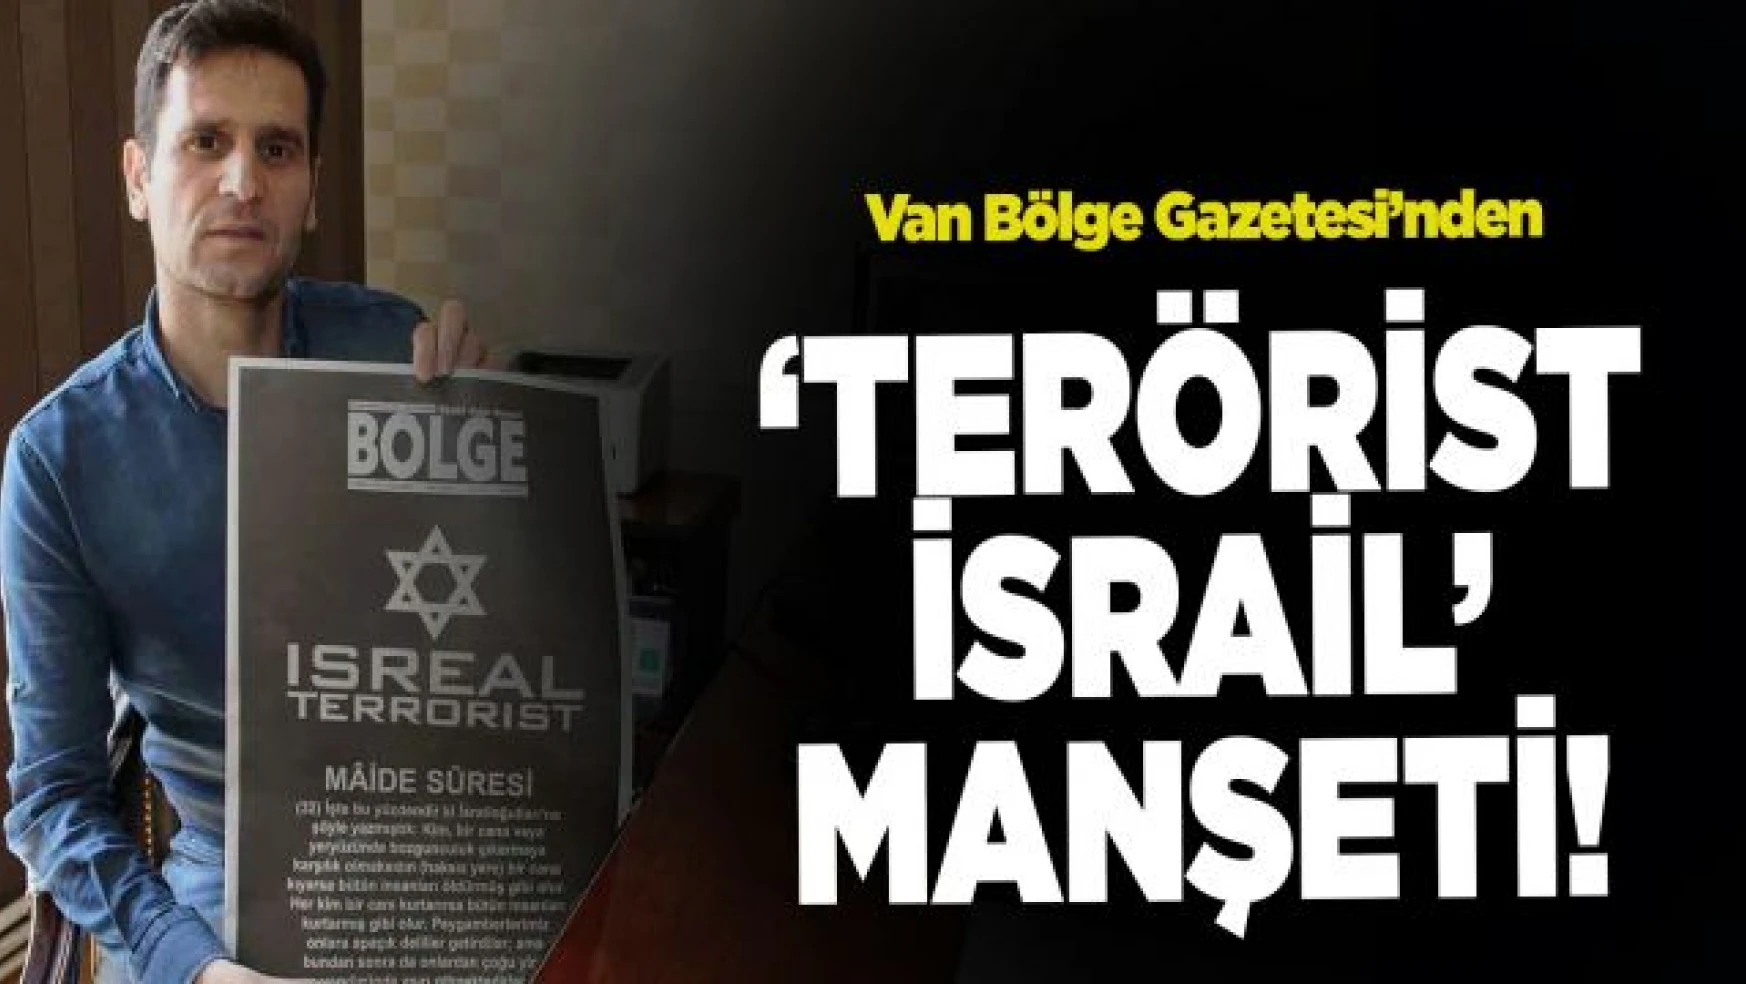 Van Bölge Gazetesi'nden 'Terörist İsrail' manşeti!